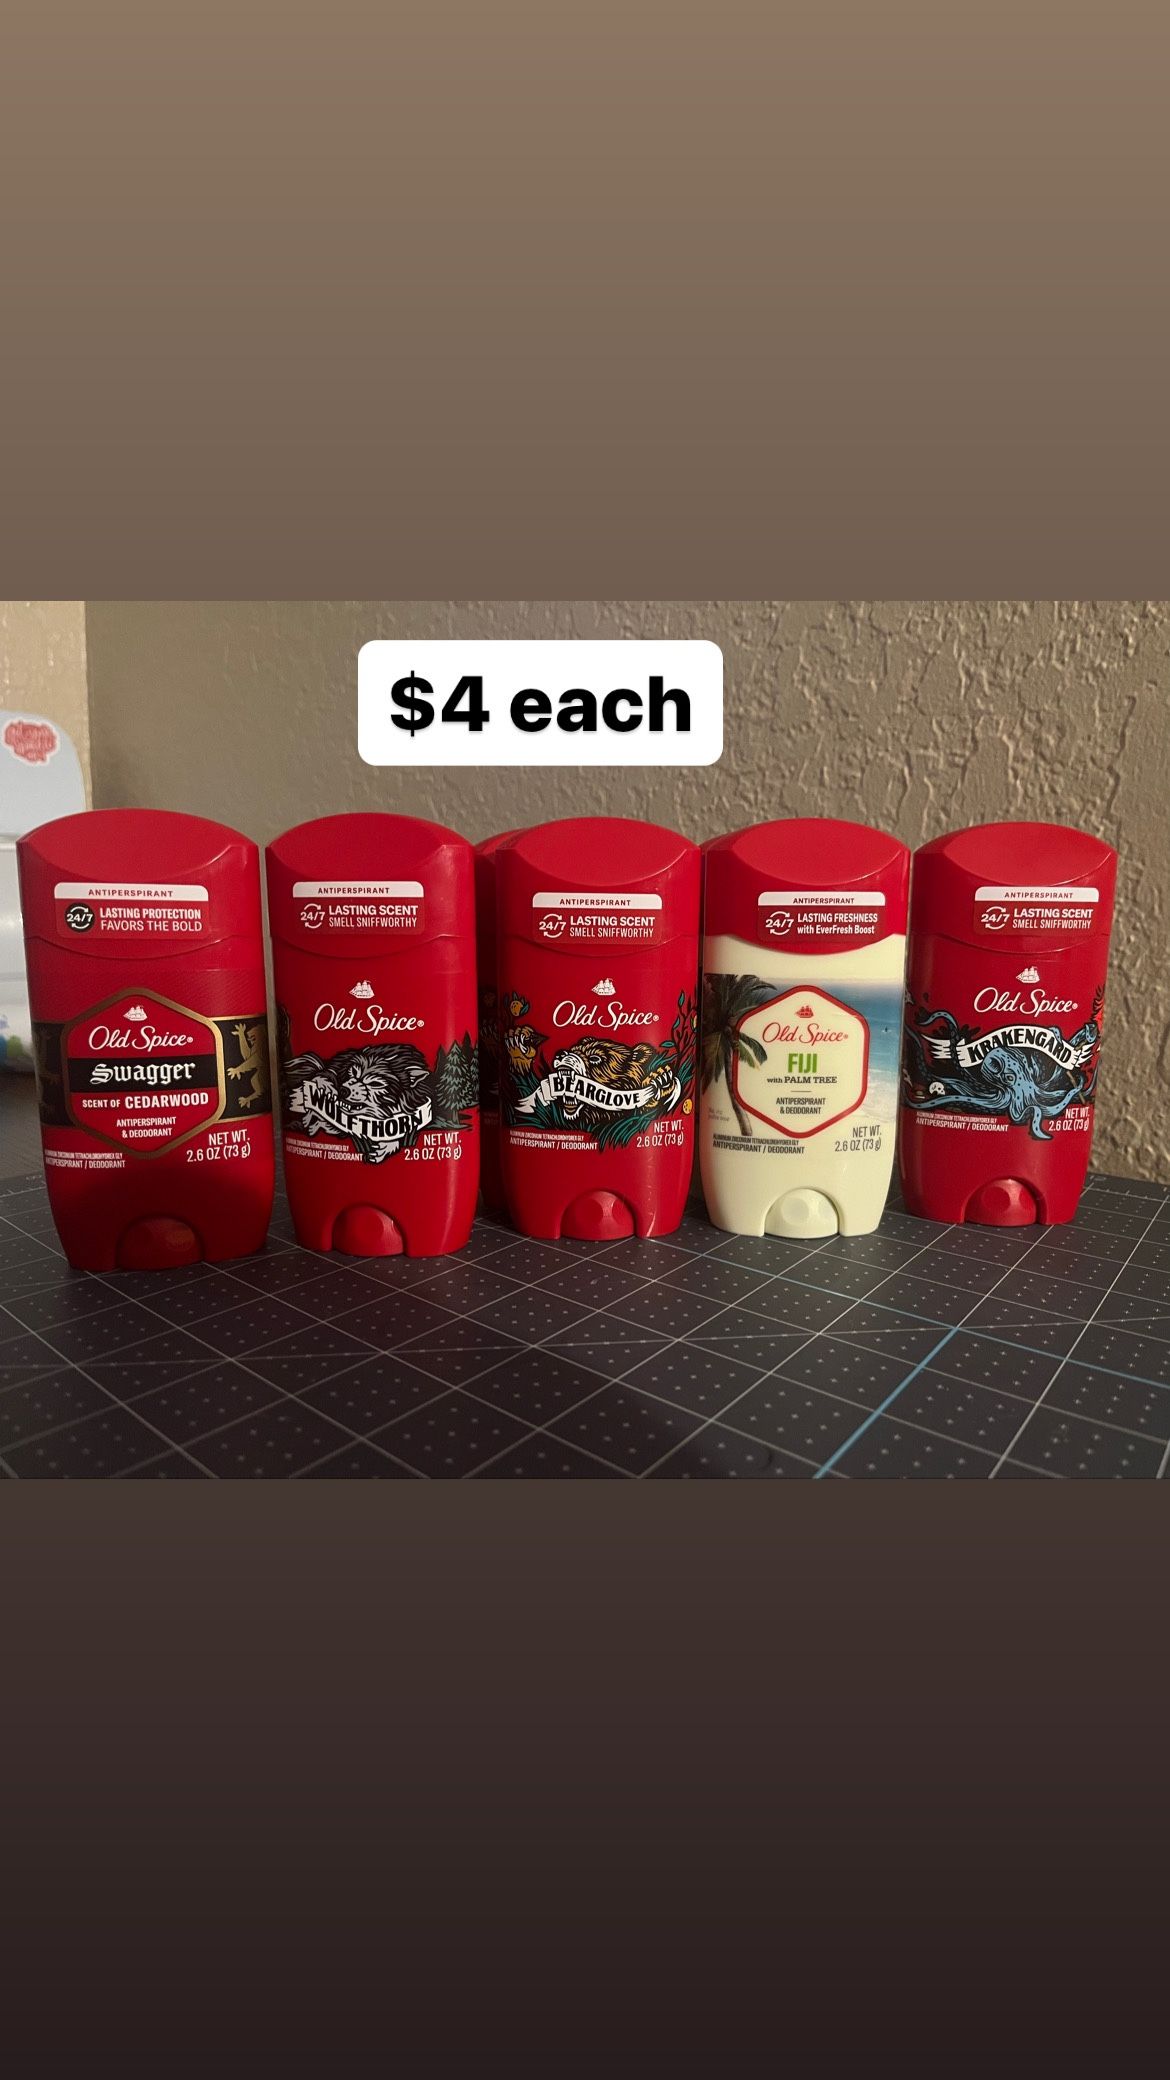 Old Spice Depdorant $4 each